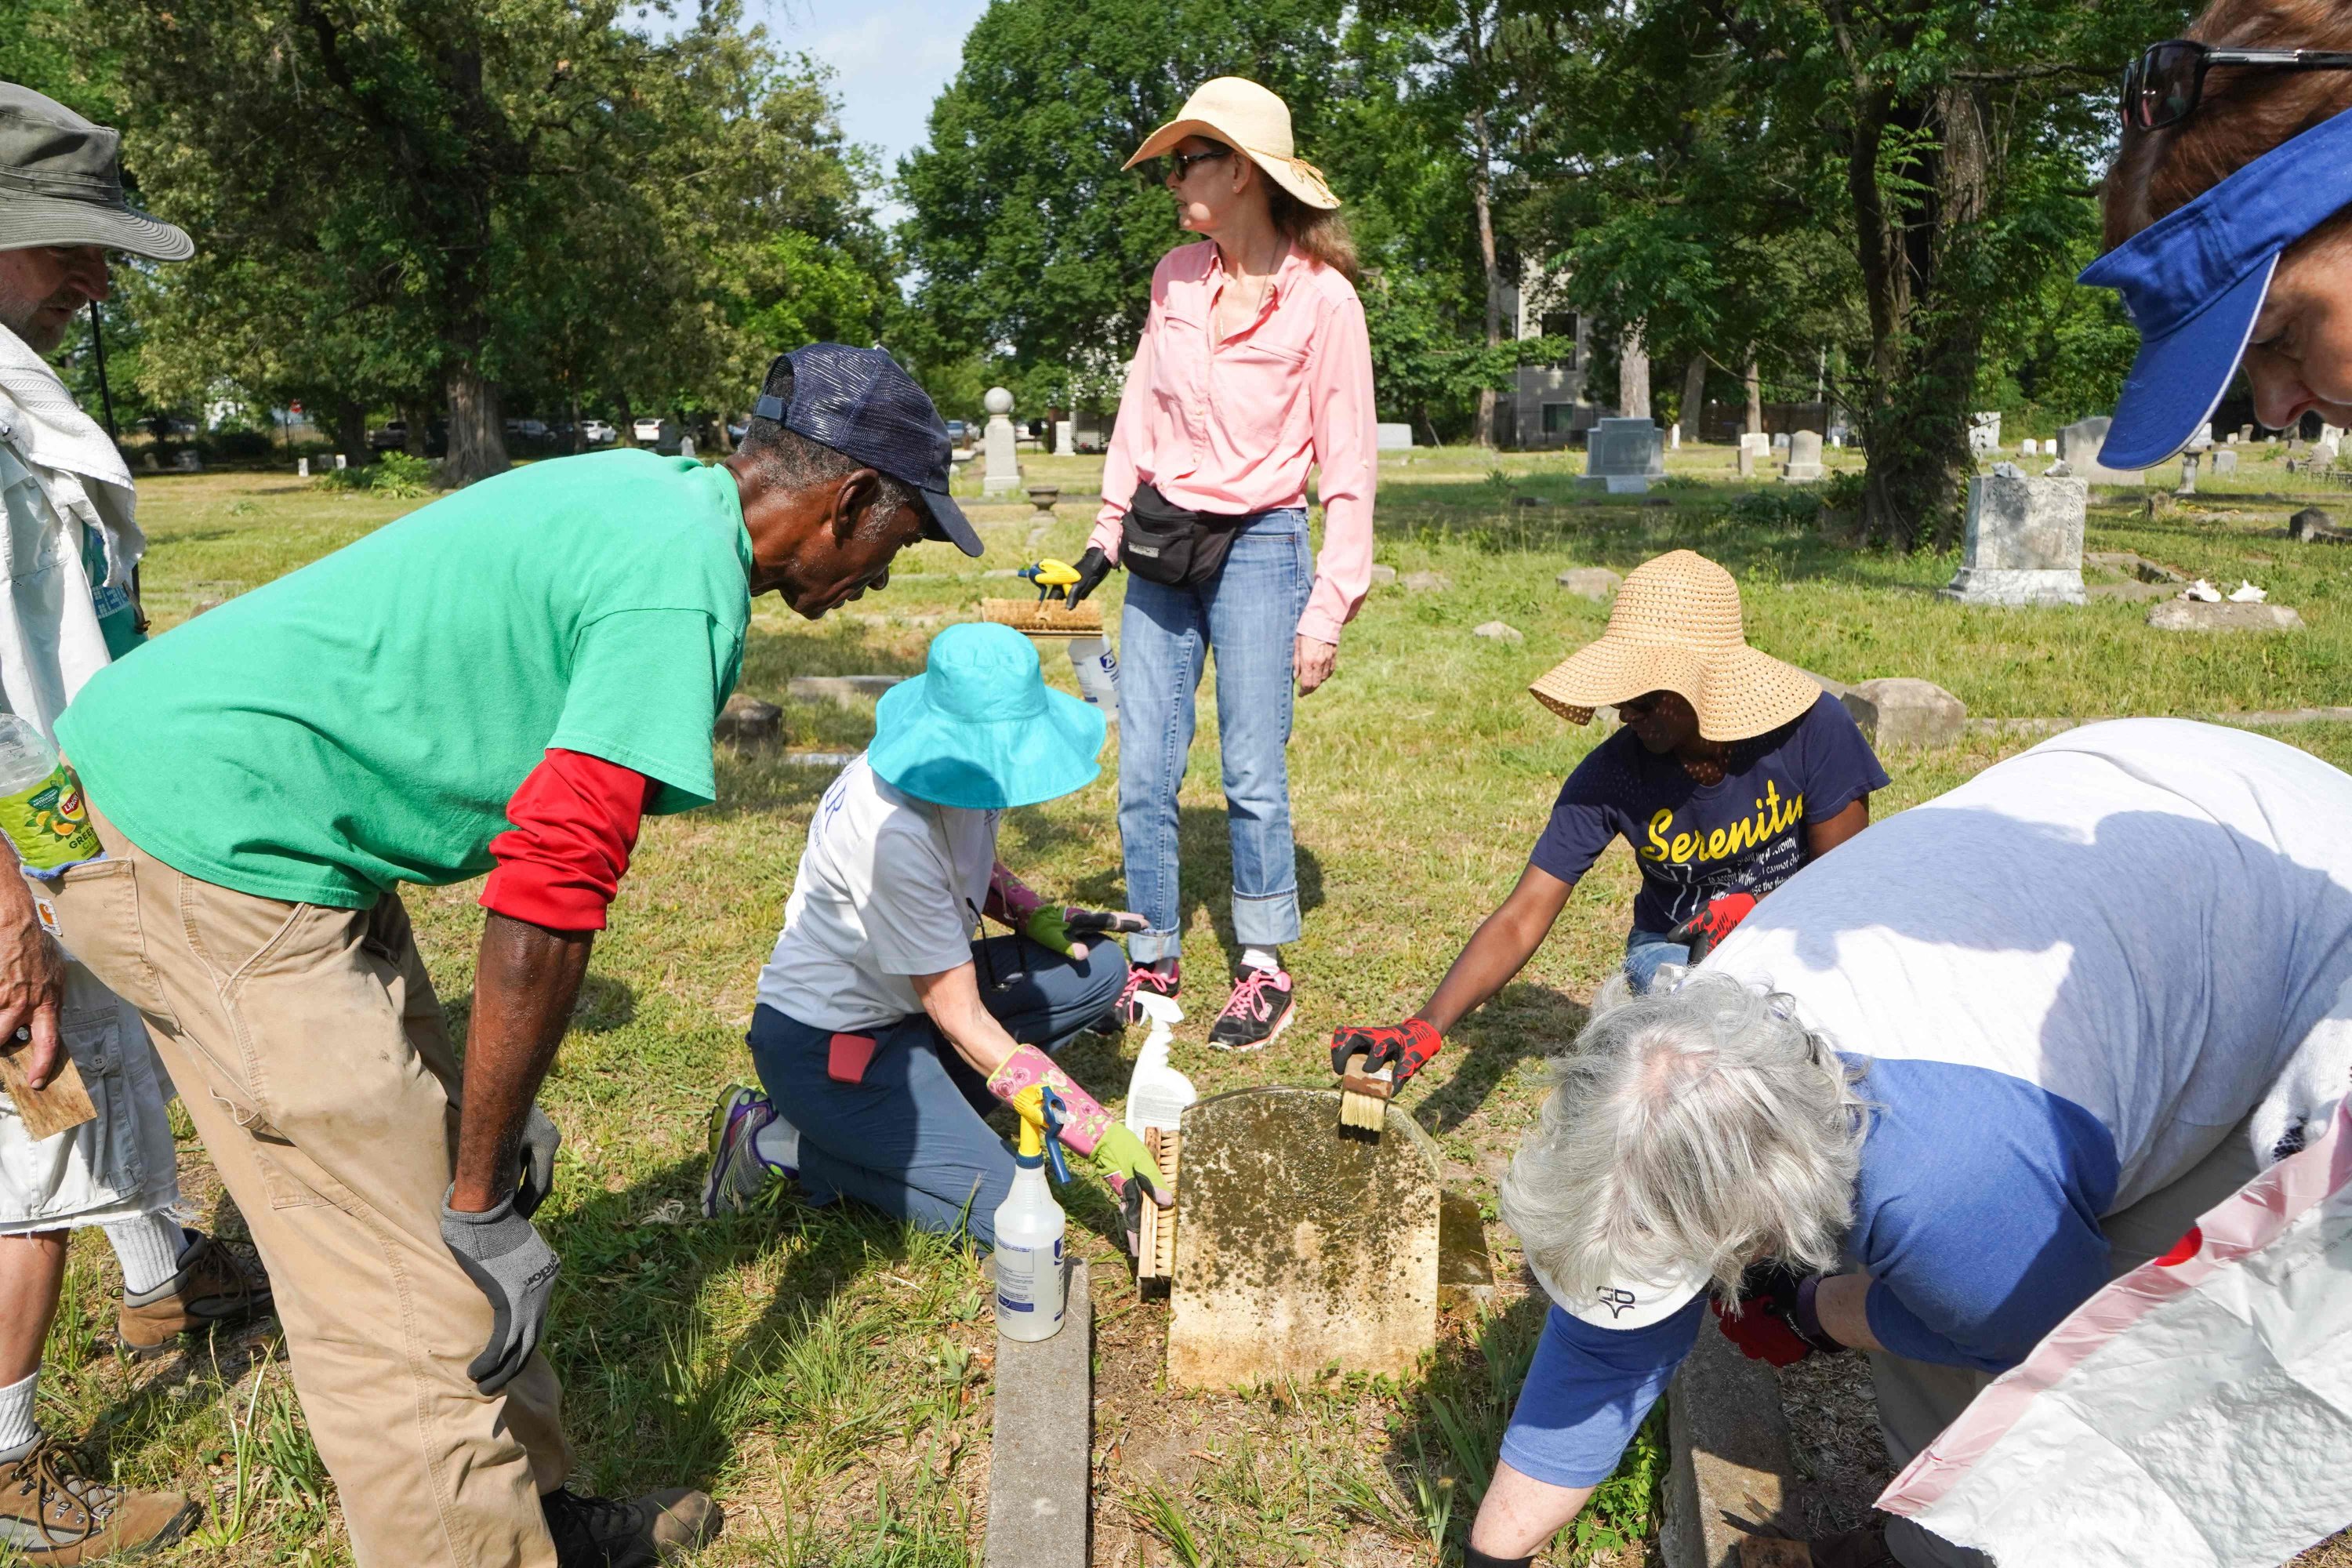 Charles Cook dikelilingi oleh para sukarelawan yang datang untuk menjaga kebersihan nisan kuburan pada Hari Aksi di Pemakaman Olivewood di Houston, Texas, AS, 21 Mei 2022. (AFP Photo)